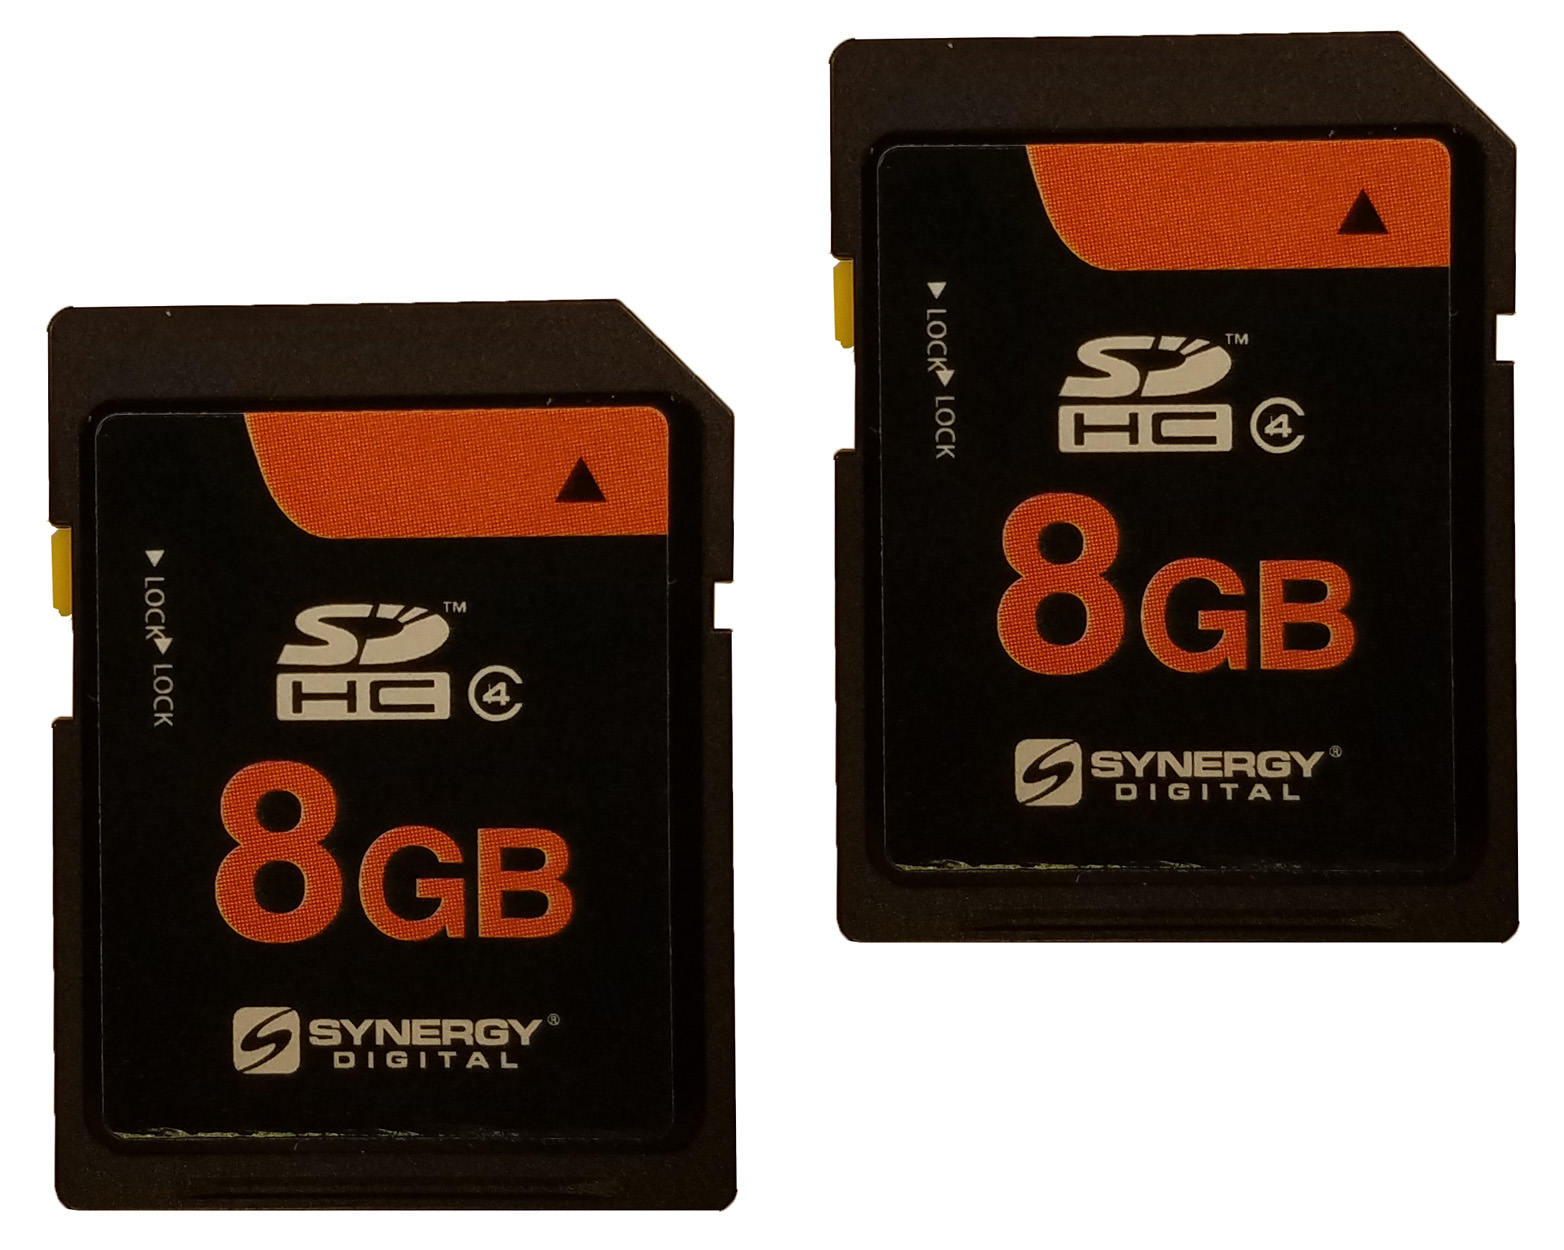 Fujifilm FinePix S9200 Digital Camera Memory Card 16GB Secure Digital Flash Memory Card SDHC